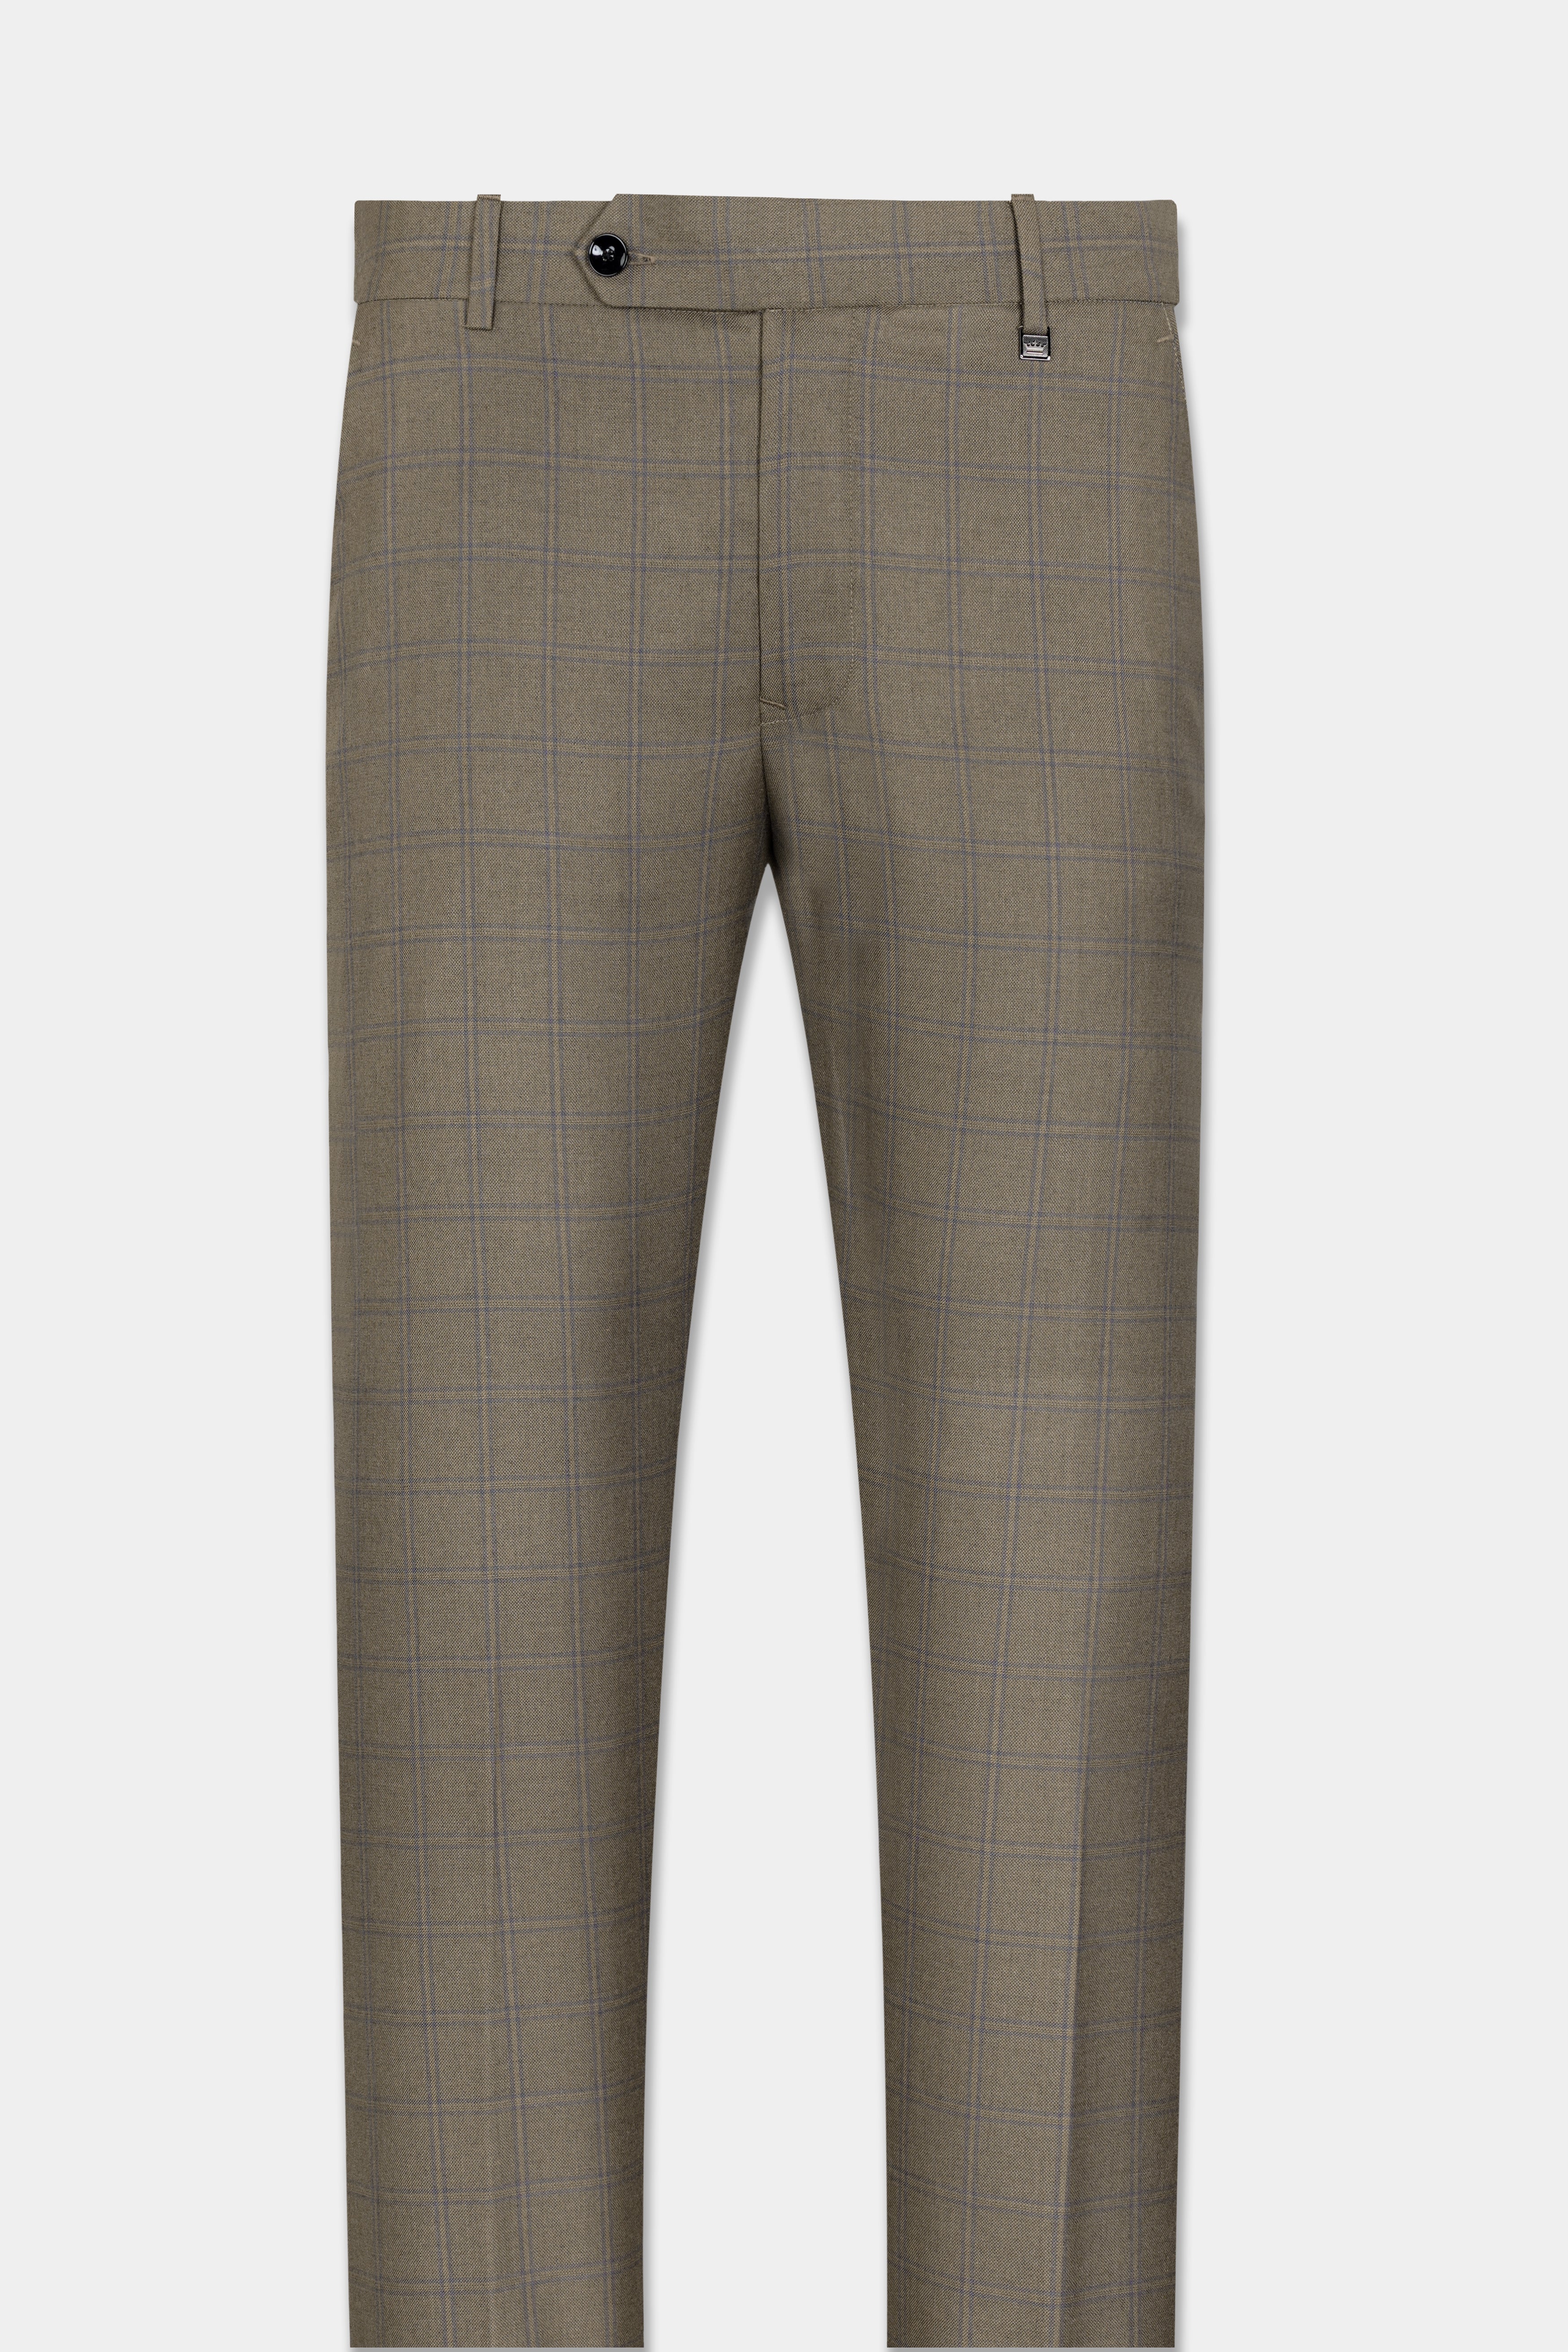 Makara Brown Checkered and Tortilla Brown Wool Rich Designer Suit